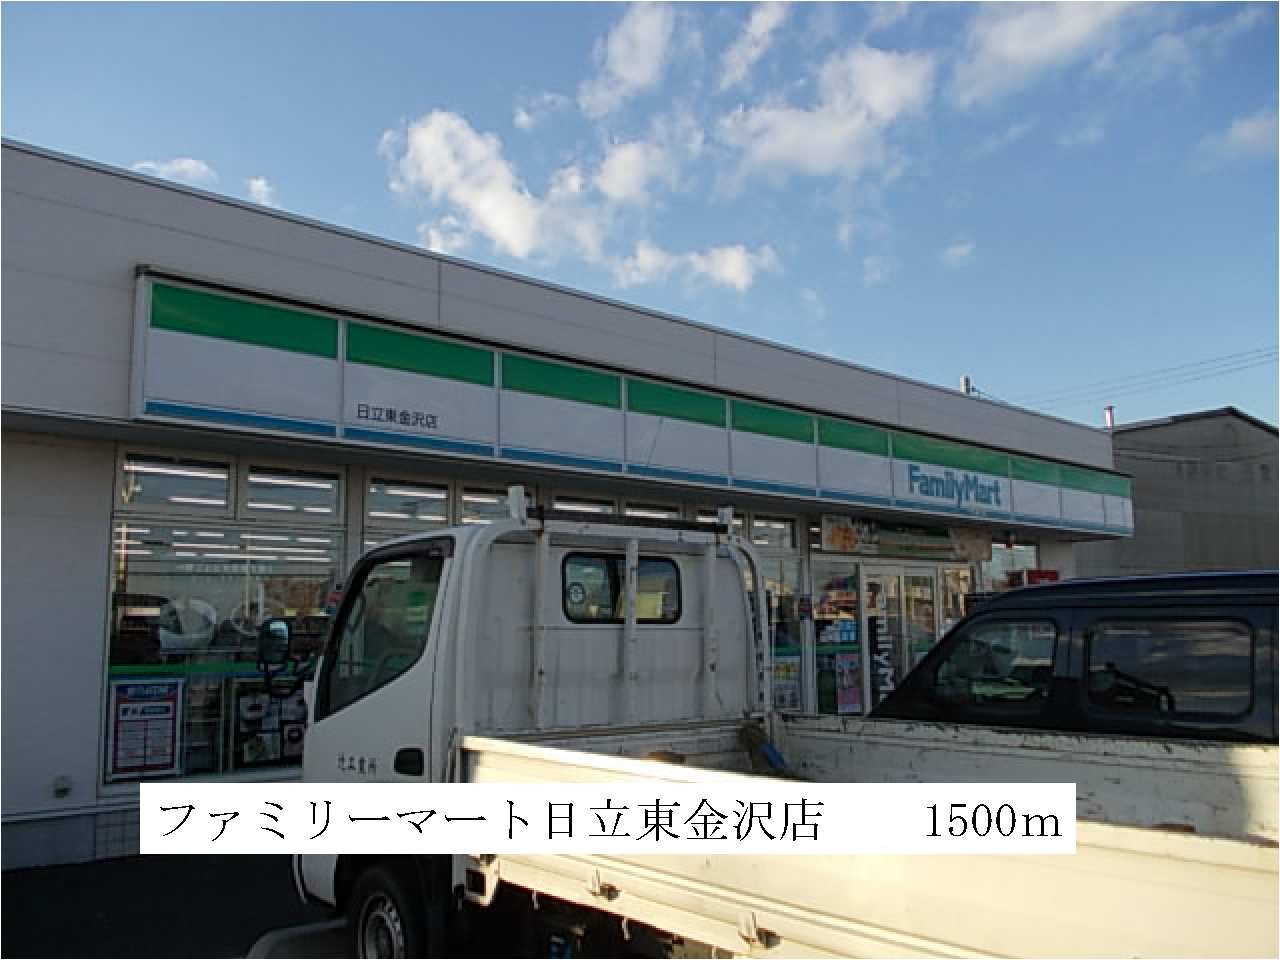 Convenience store. FamilyMart Hitachi Higashikanazawa store up (convenience store) 1500m